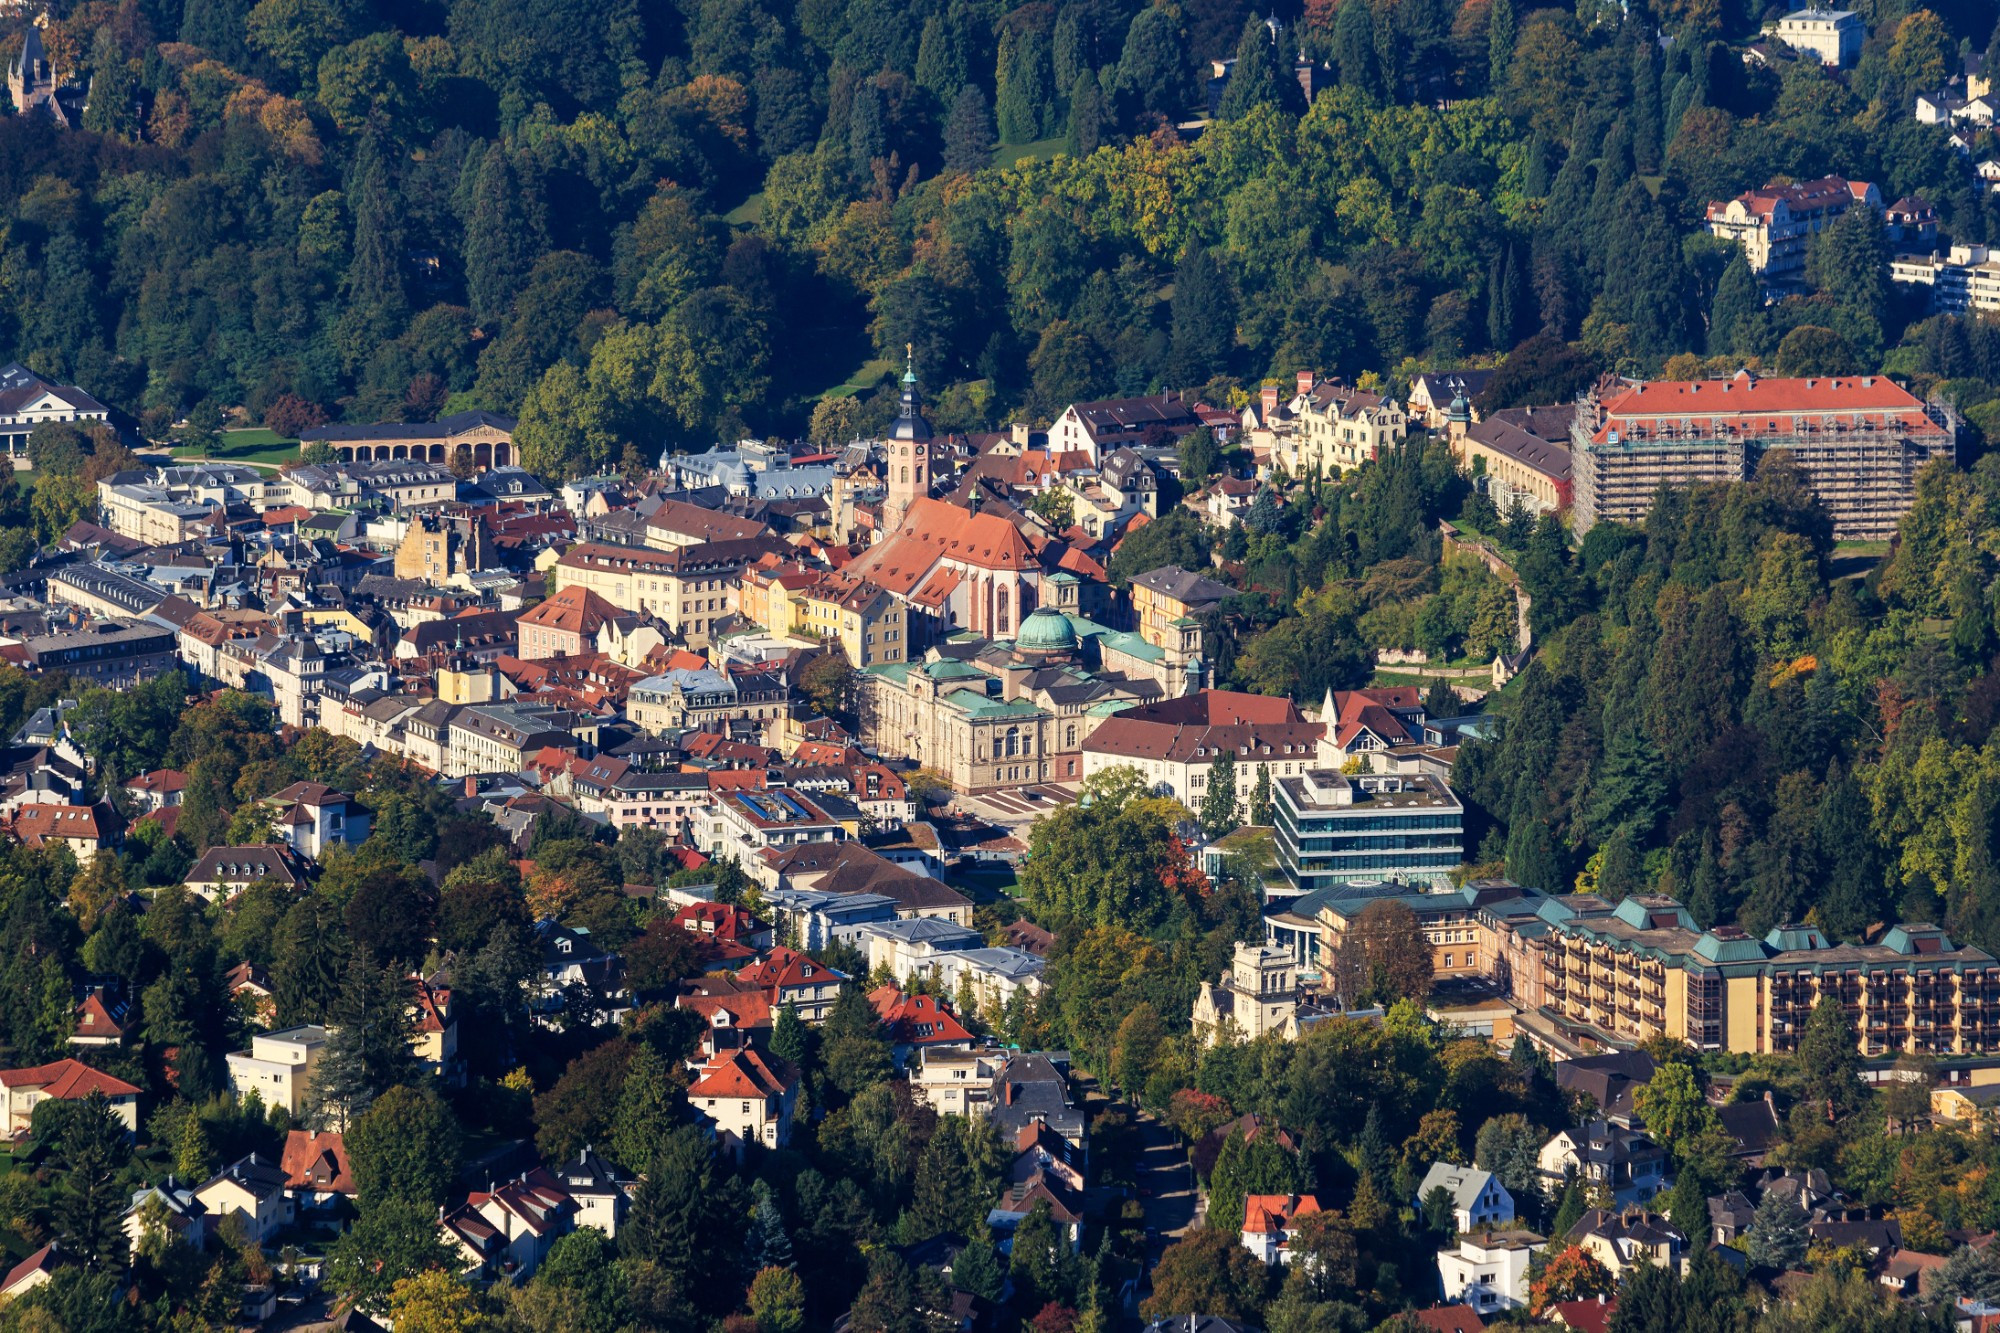 Baden-Baden, Germany